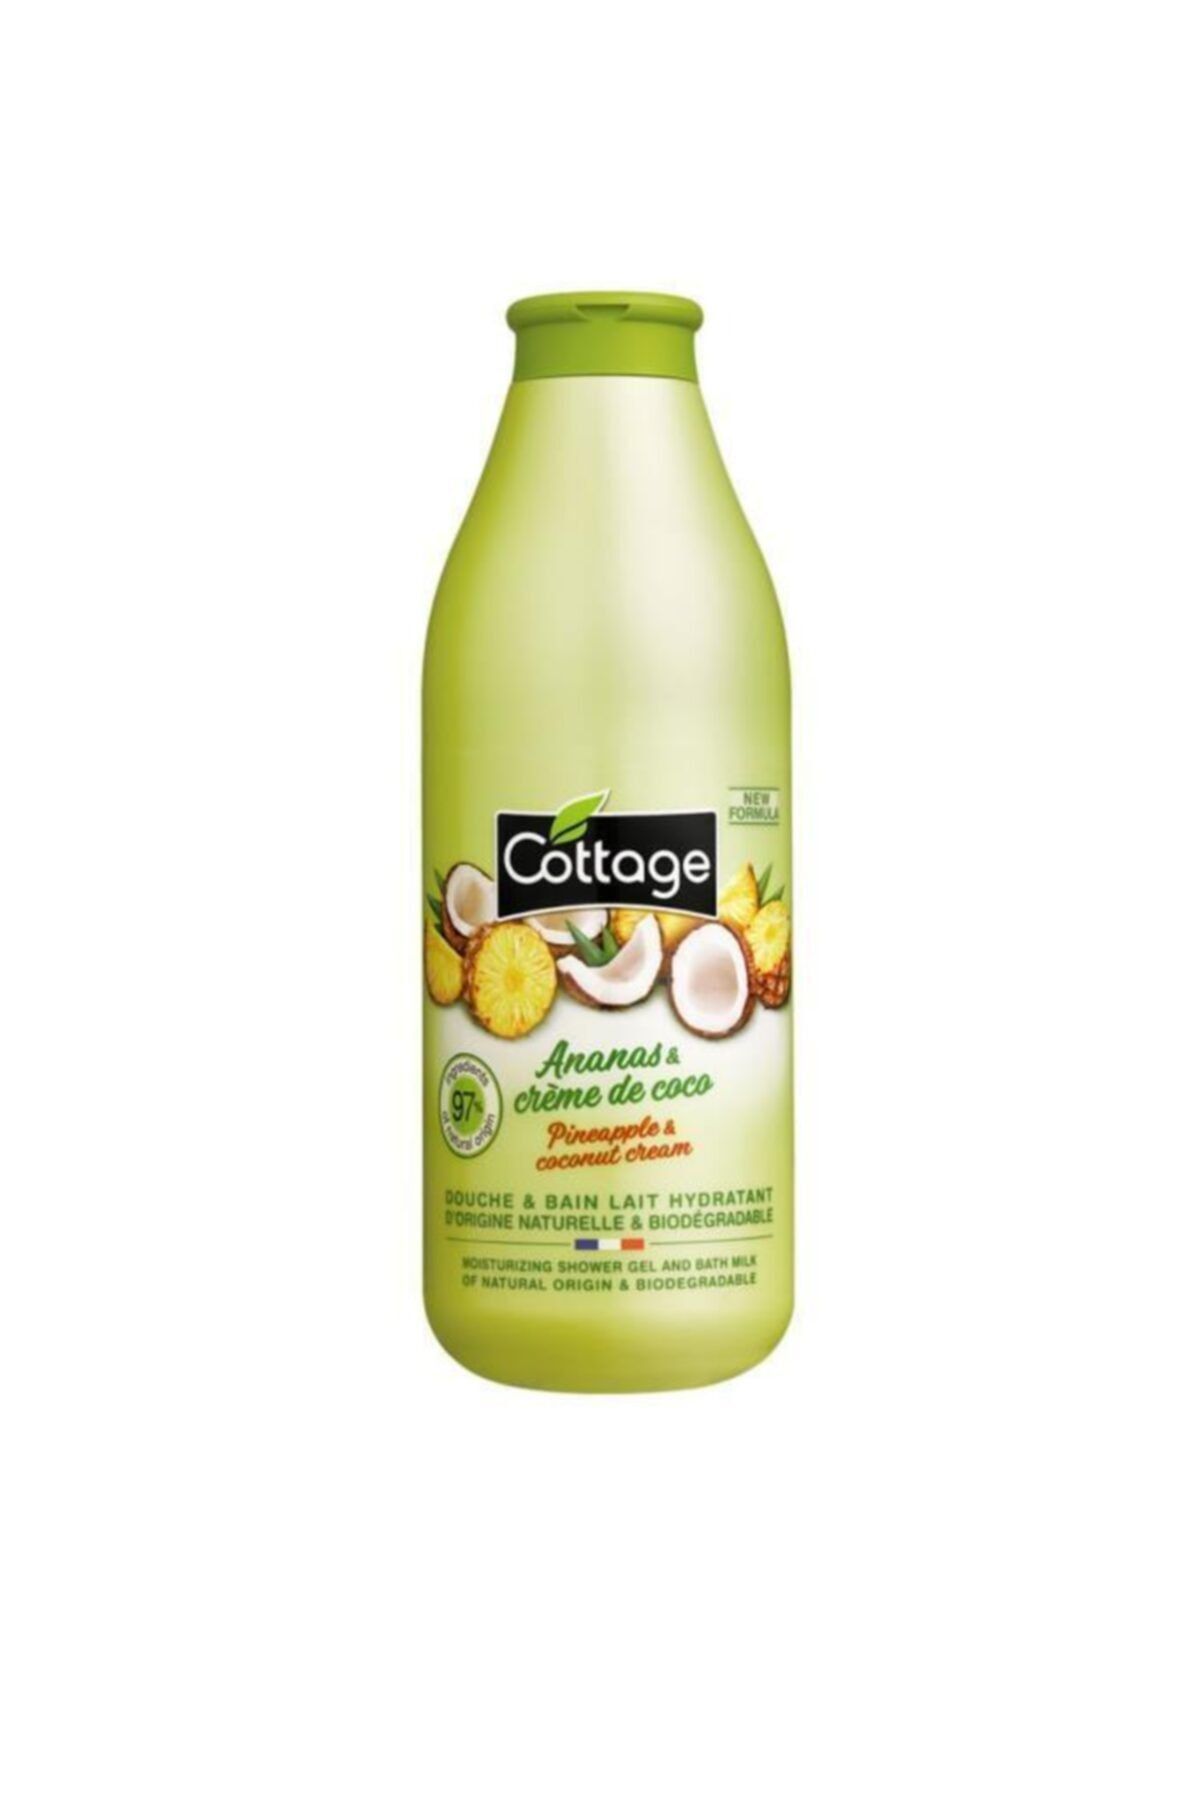 Cottage Pineapple & Coconut Shower Cream Ananas Hindistan Cevizi Duş Jeli 750ml